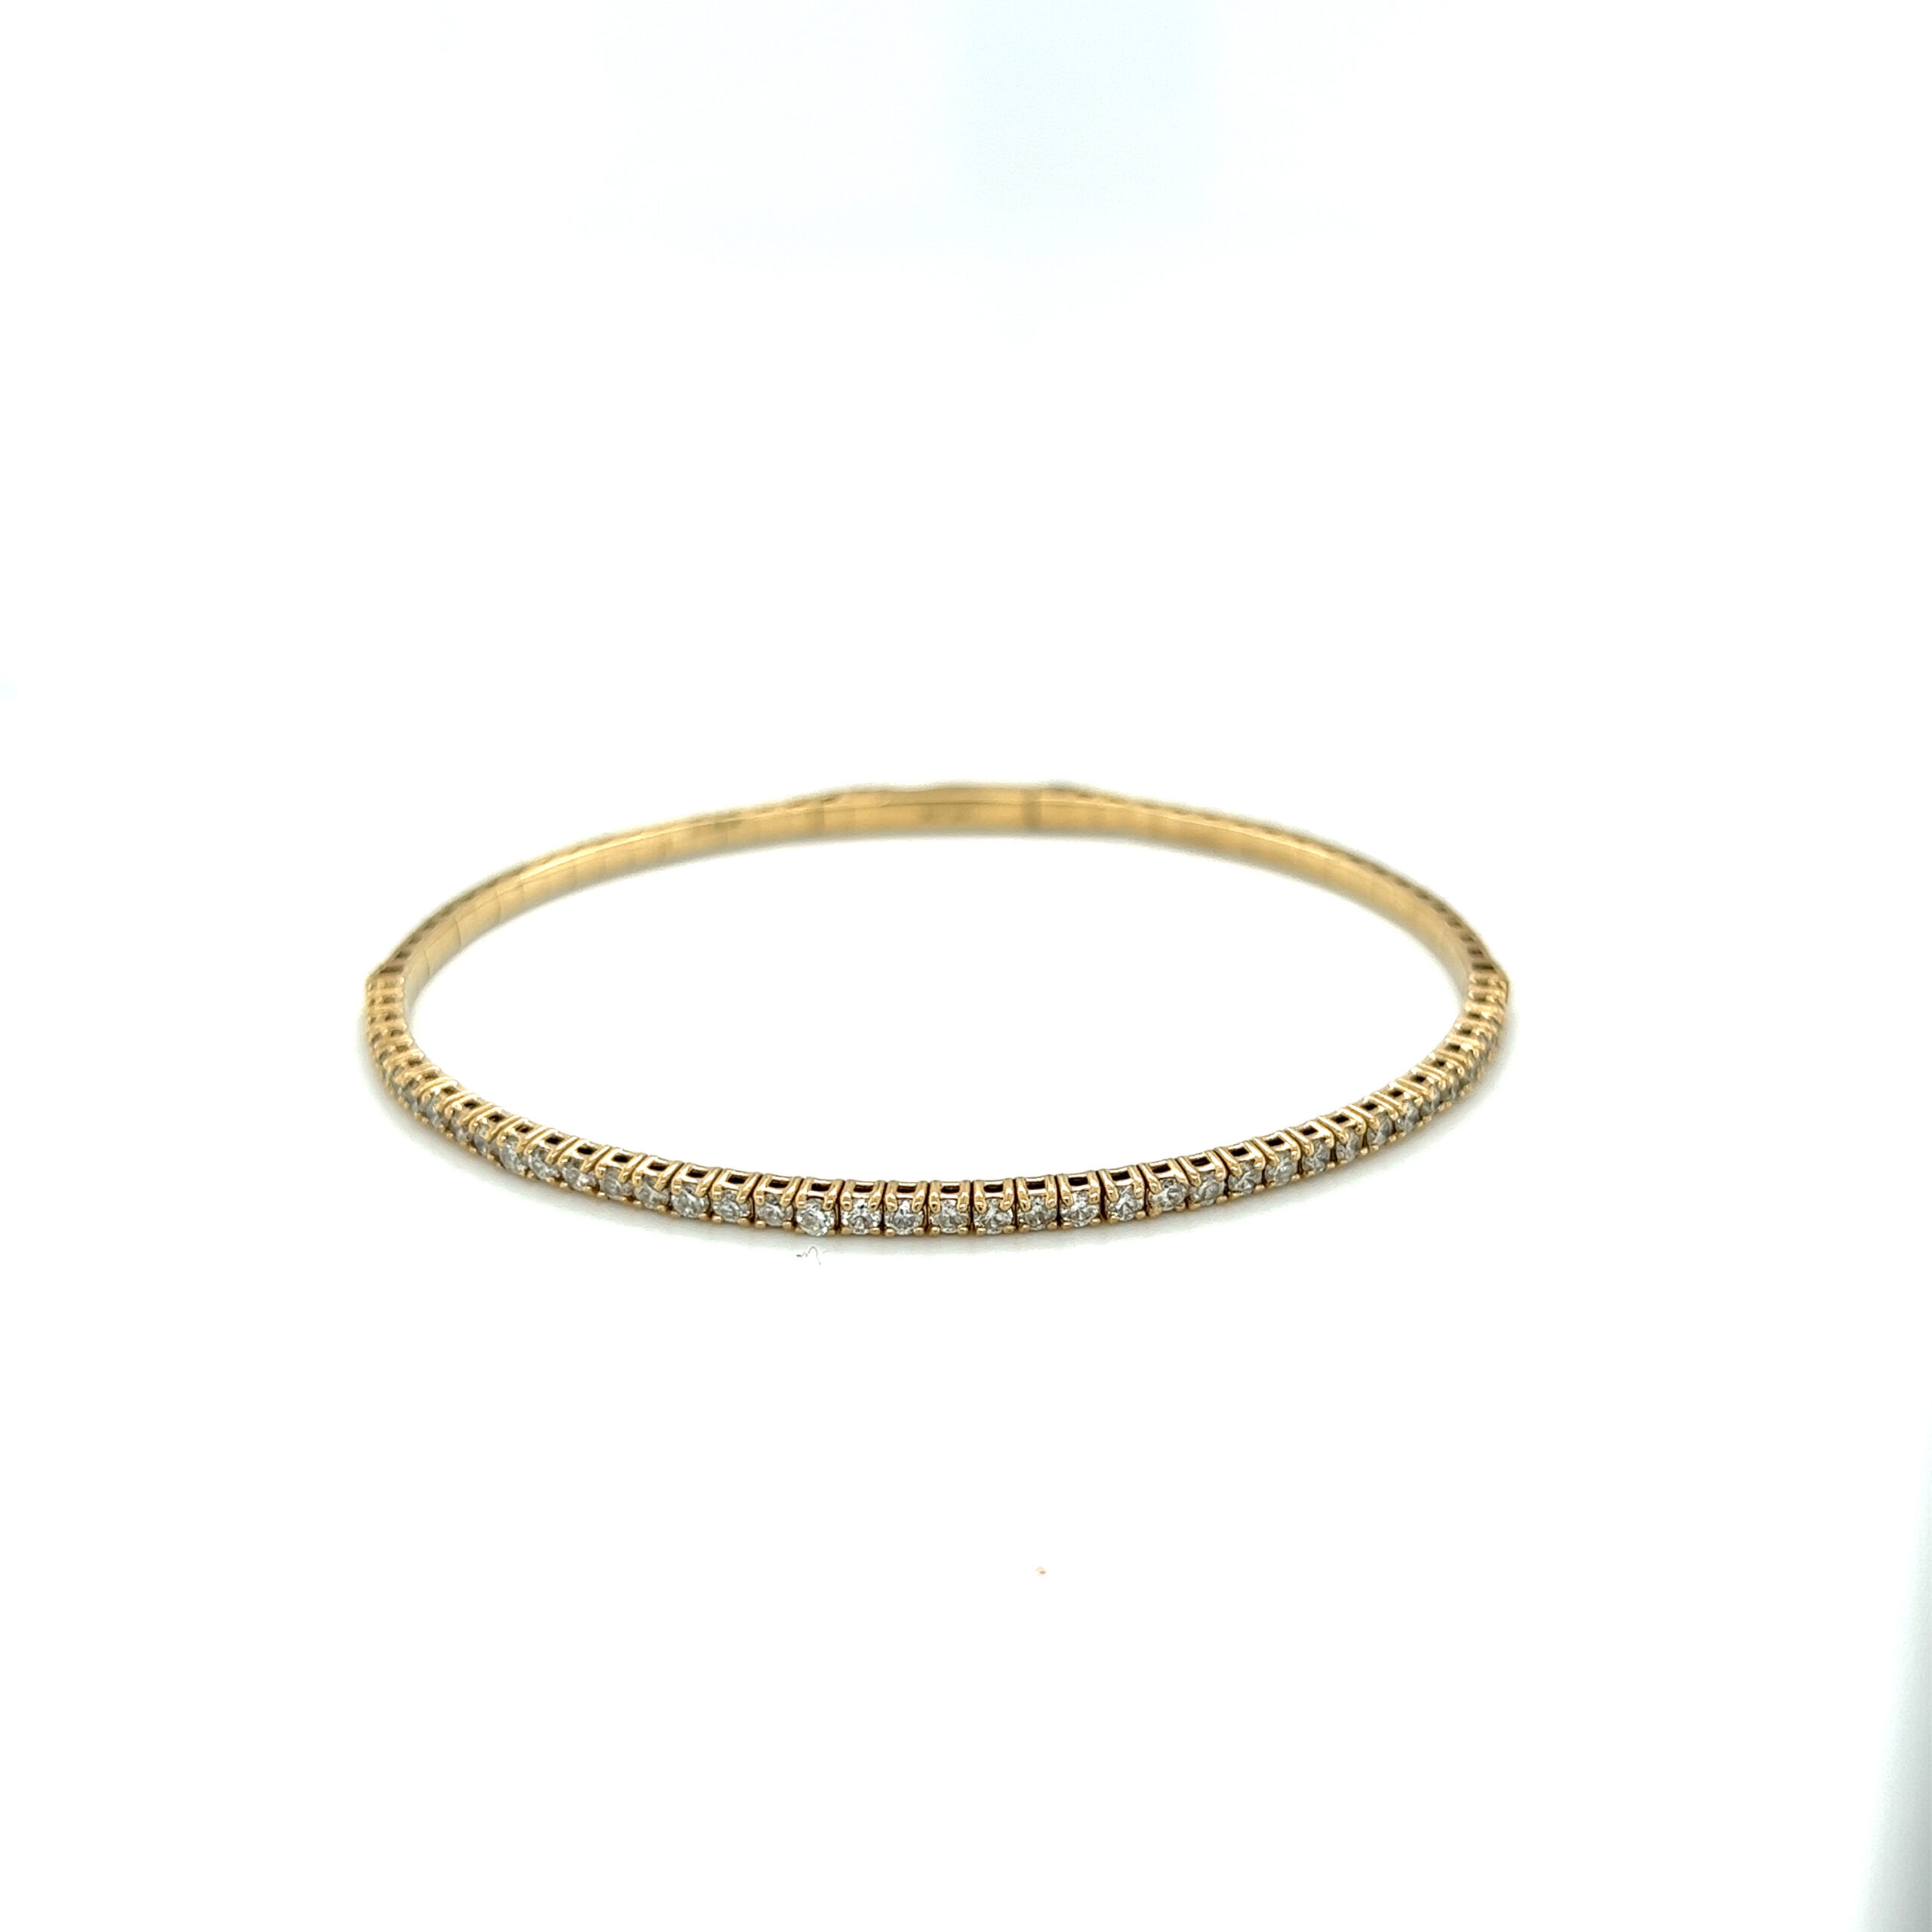 Featured image for “Flexible Tennis Bracelet”